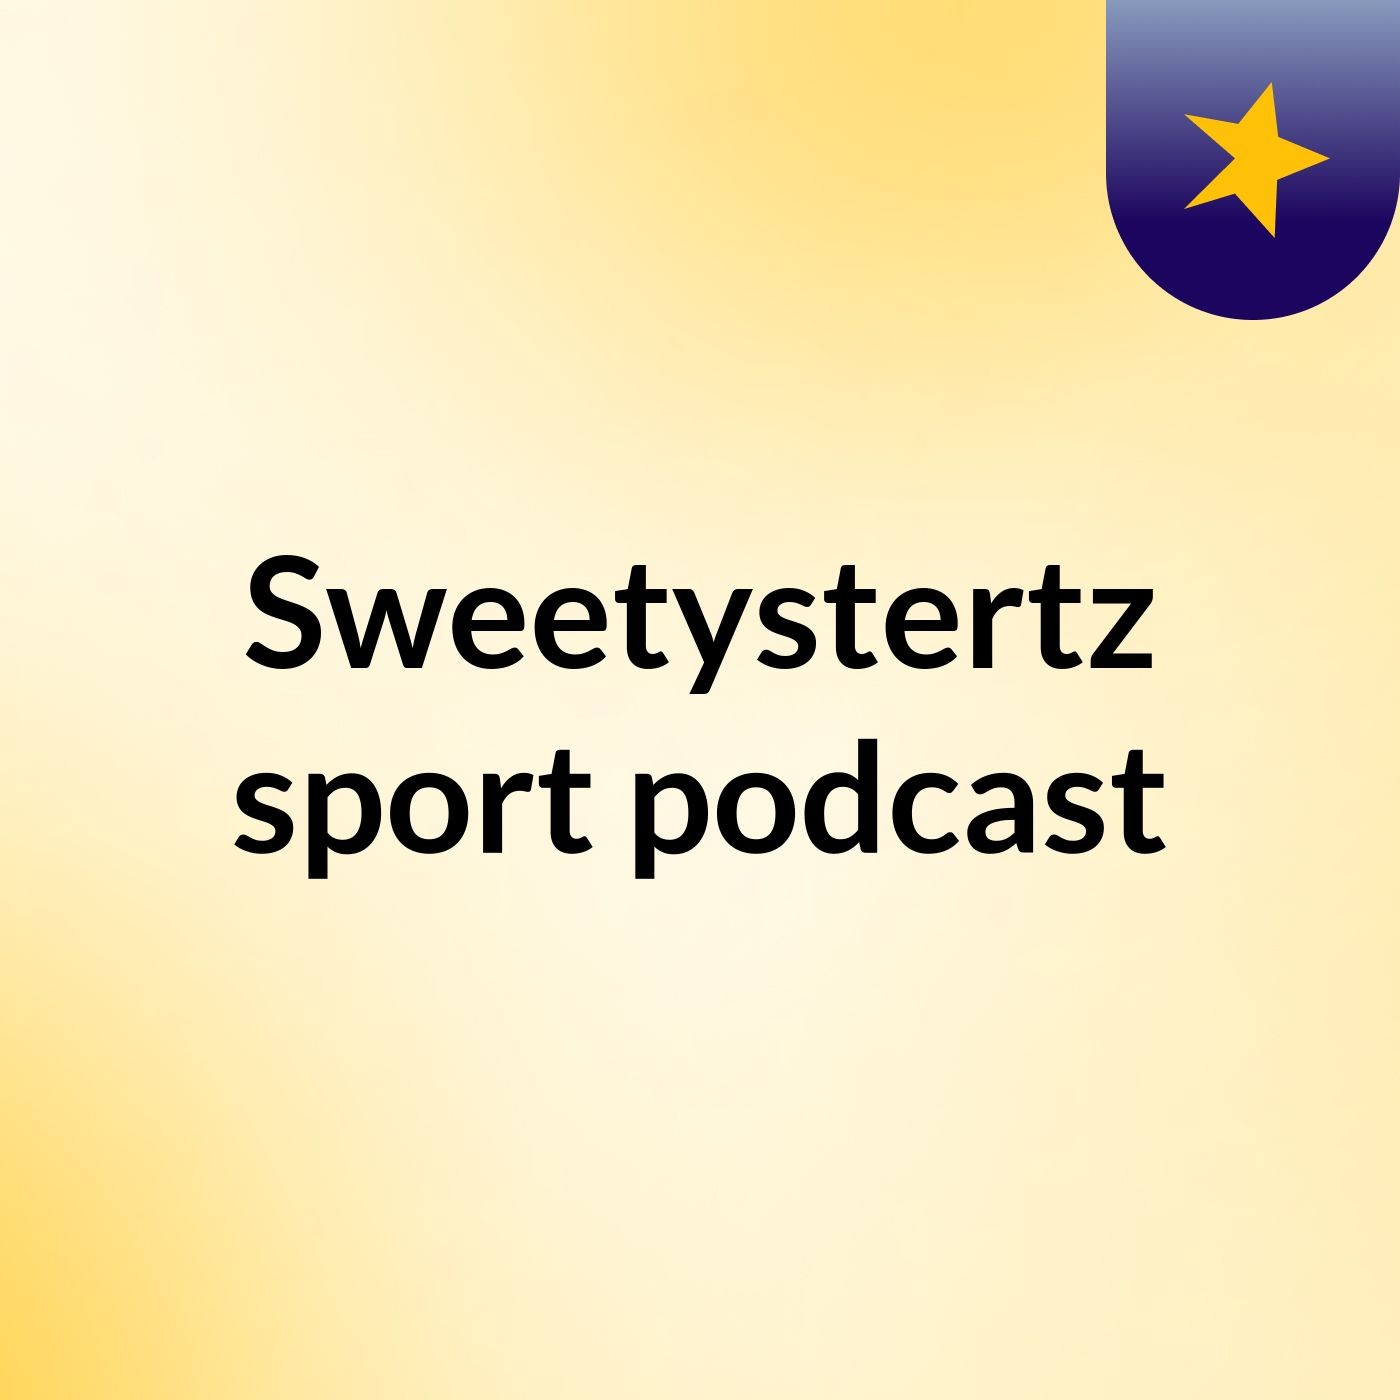 Sweetystertz sport podcast